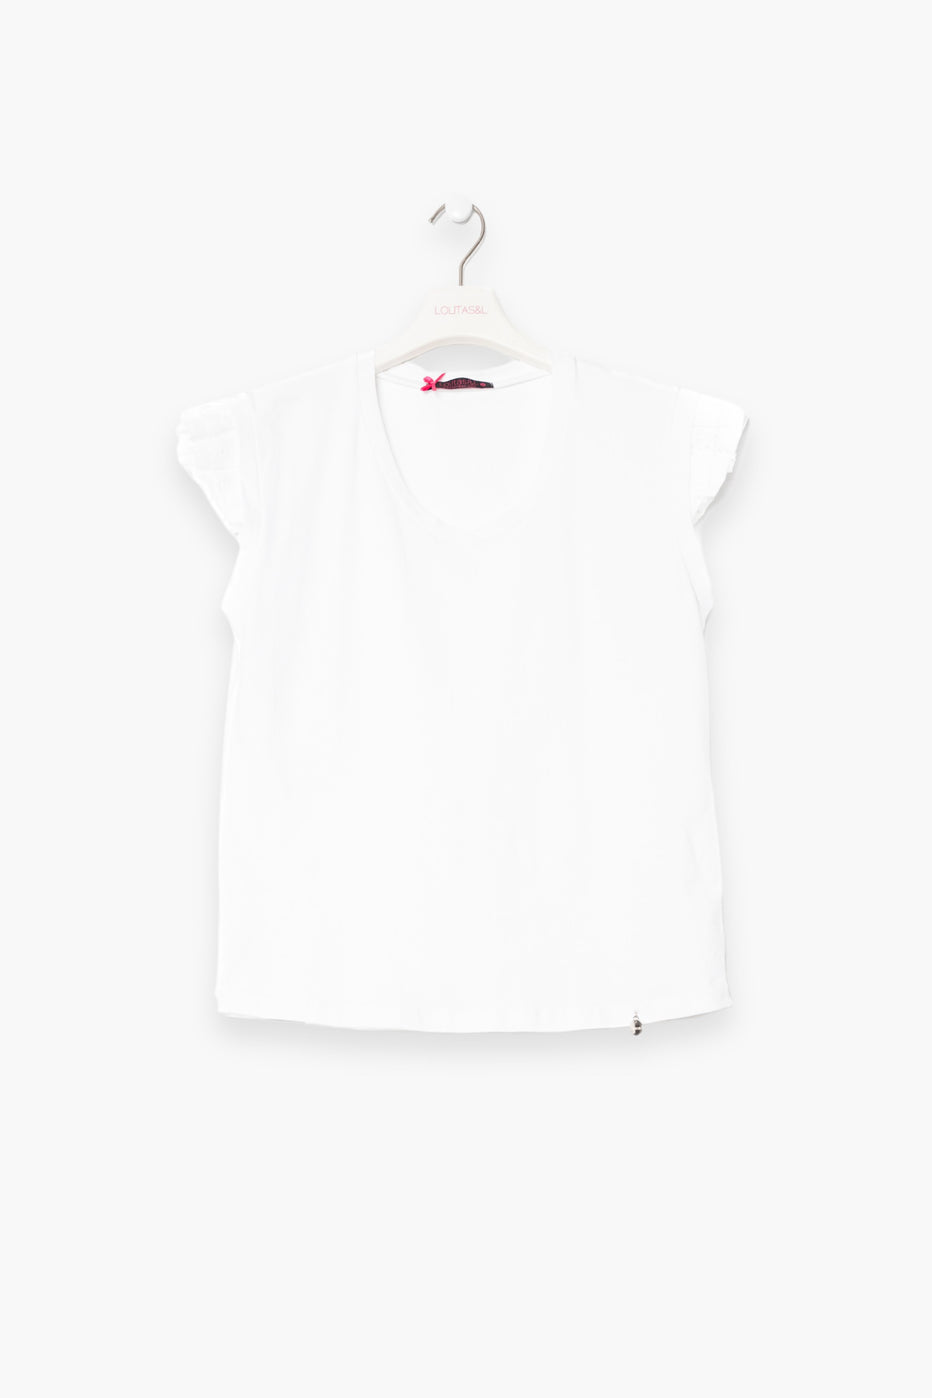 Camiseta blanca manga corta con volante grogre LolitasyL - lolitasyl.com